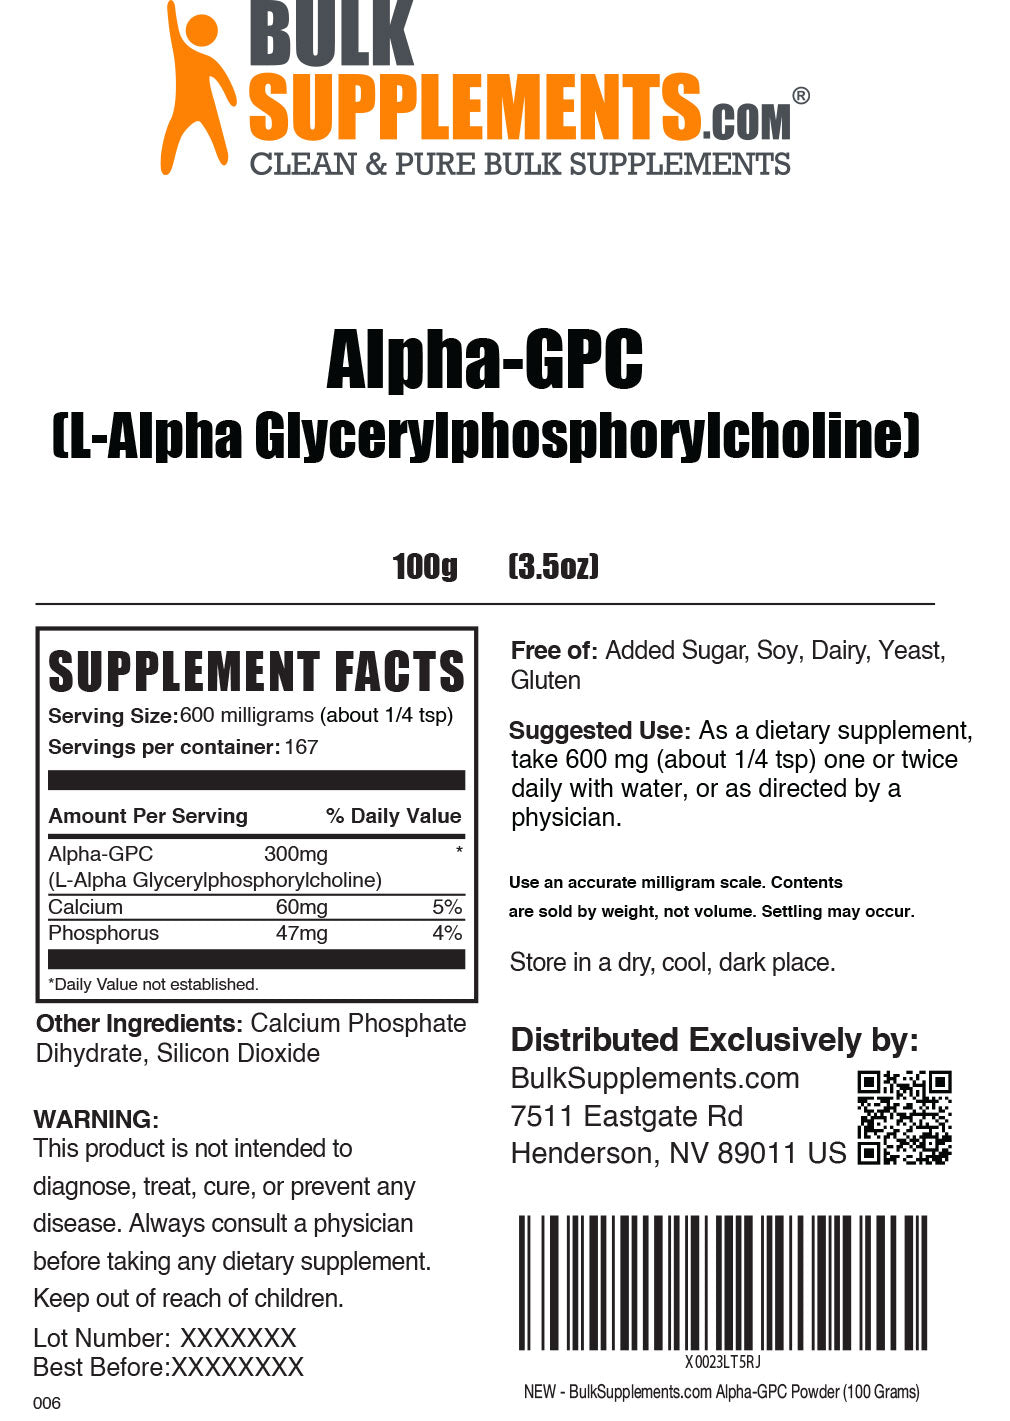 Alpha-GPC powder label 100g